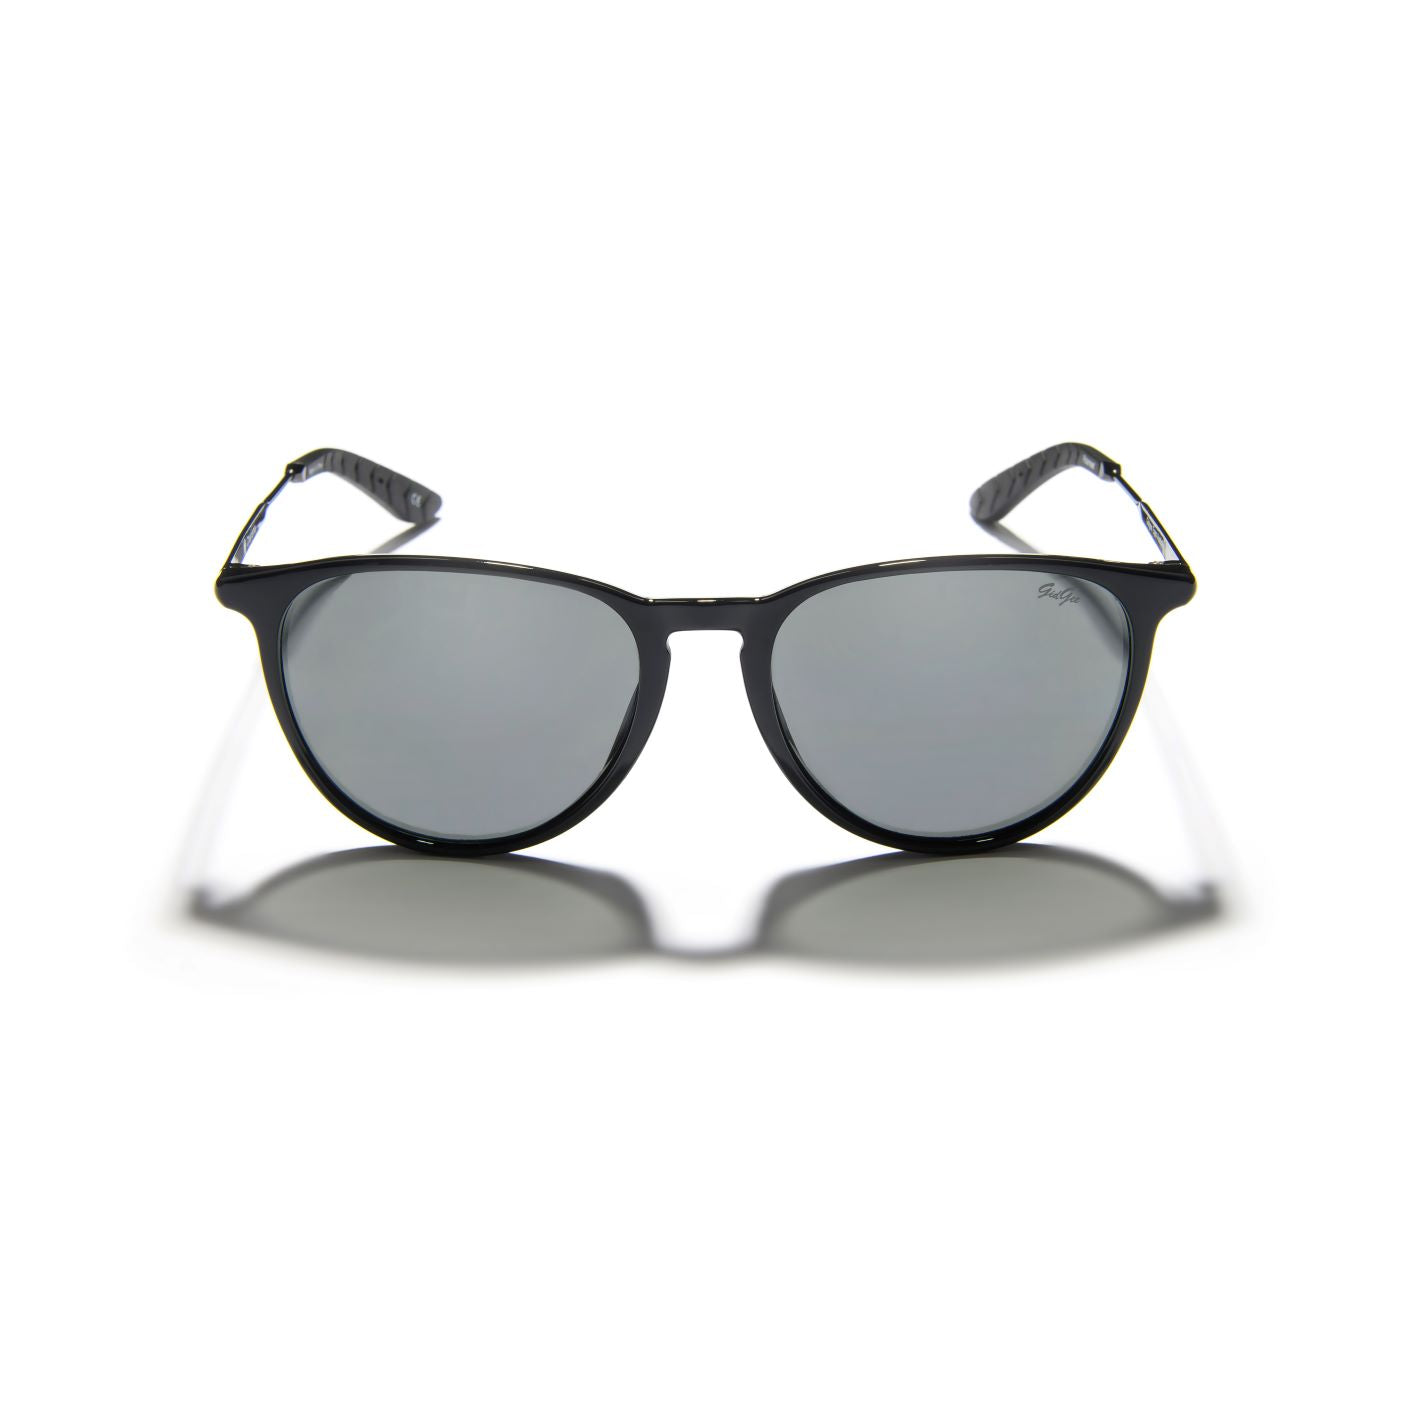 Gidgee Eyewear - Charisma Black Sunglasses